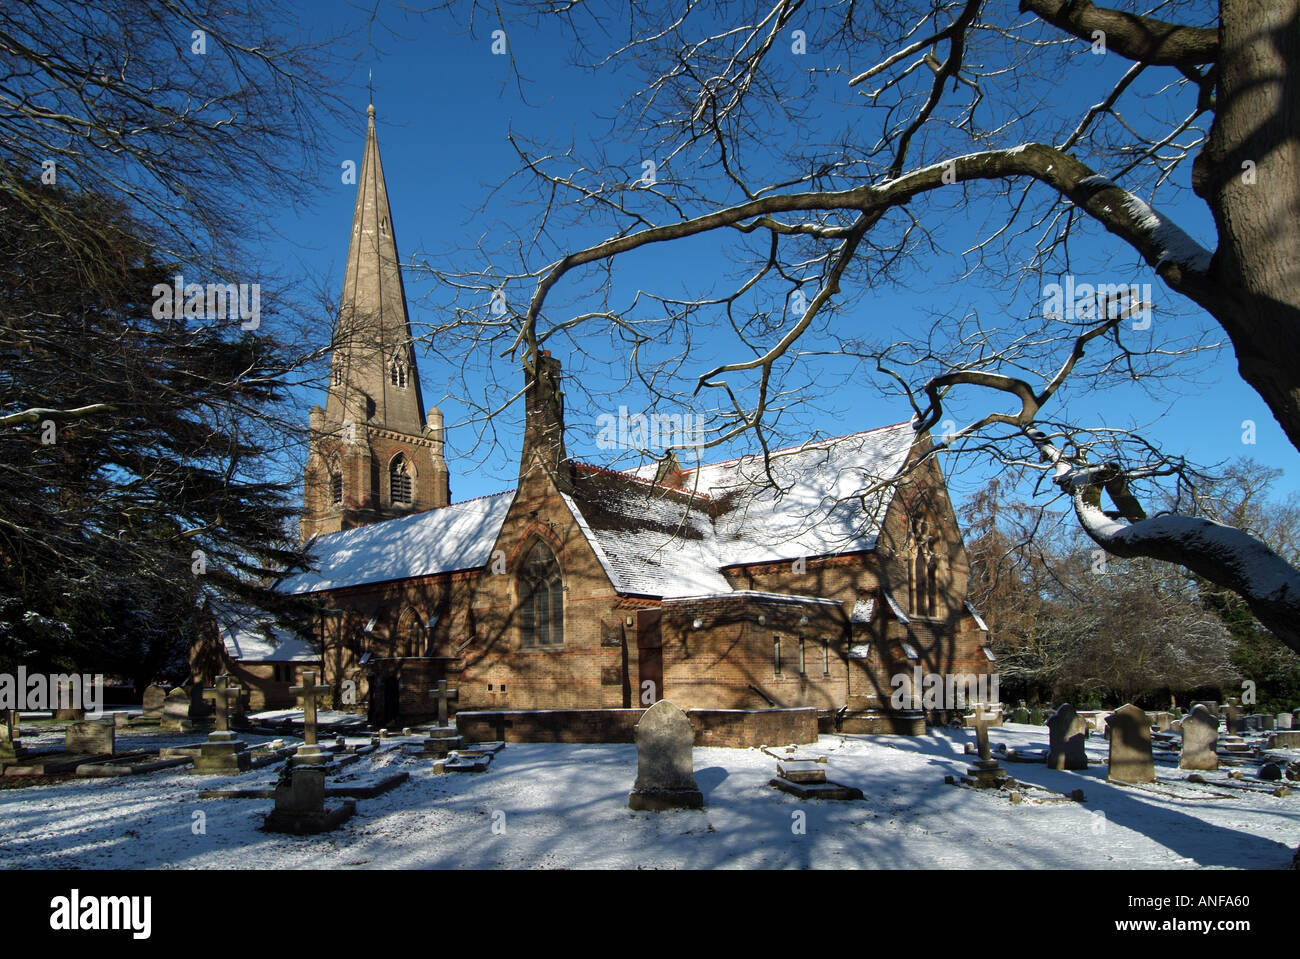 Galleywood parish church in winter snow setting Stock Photo